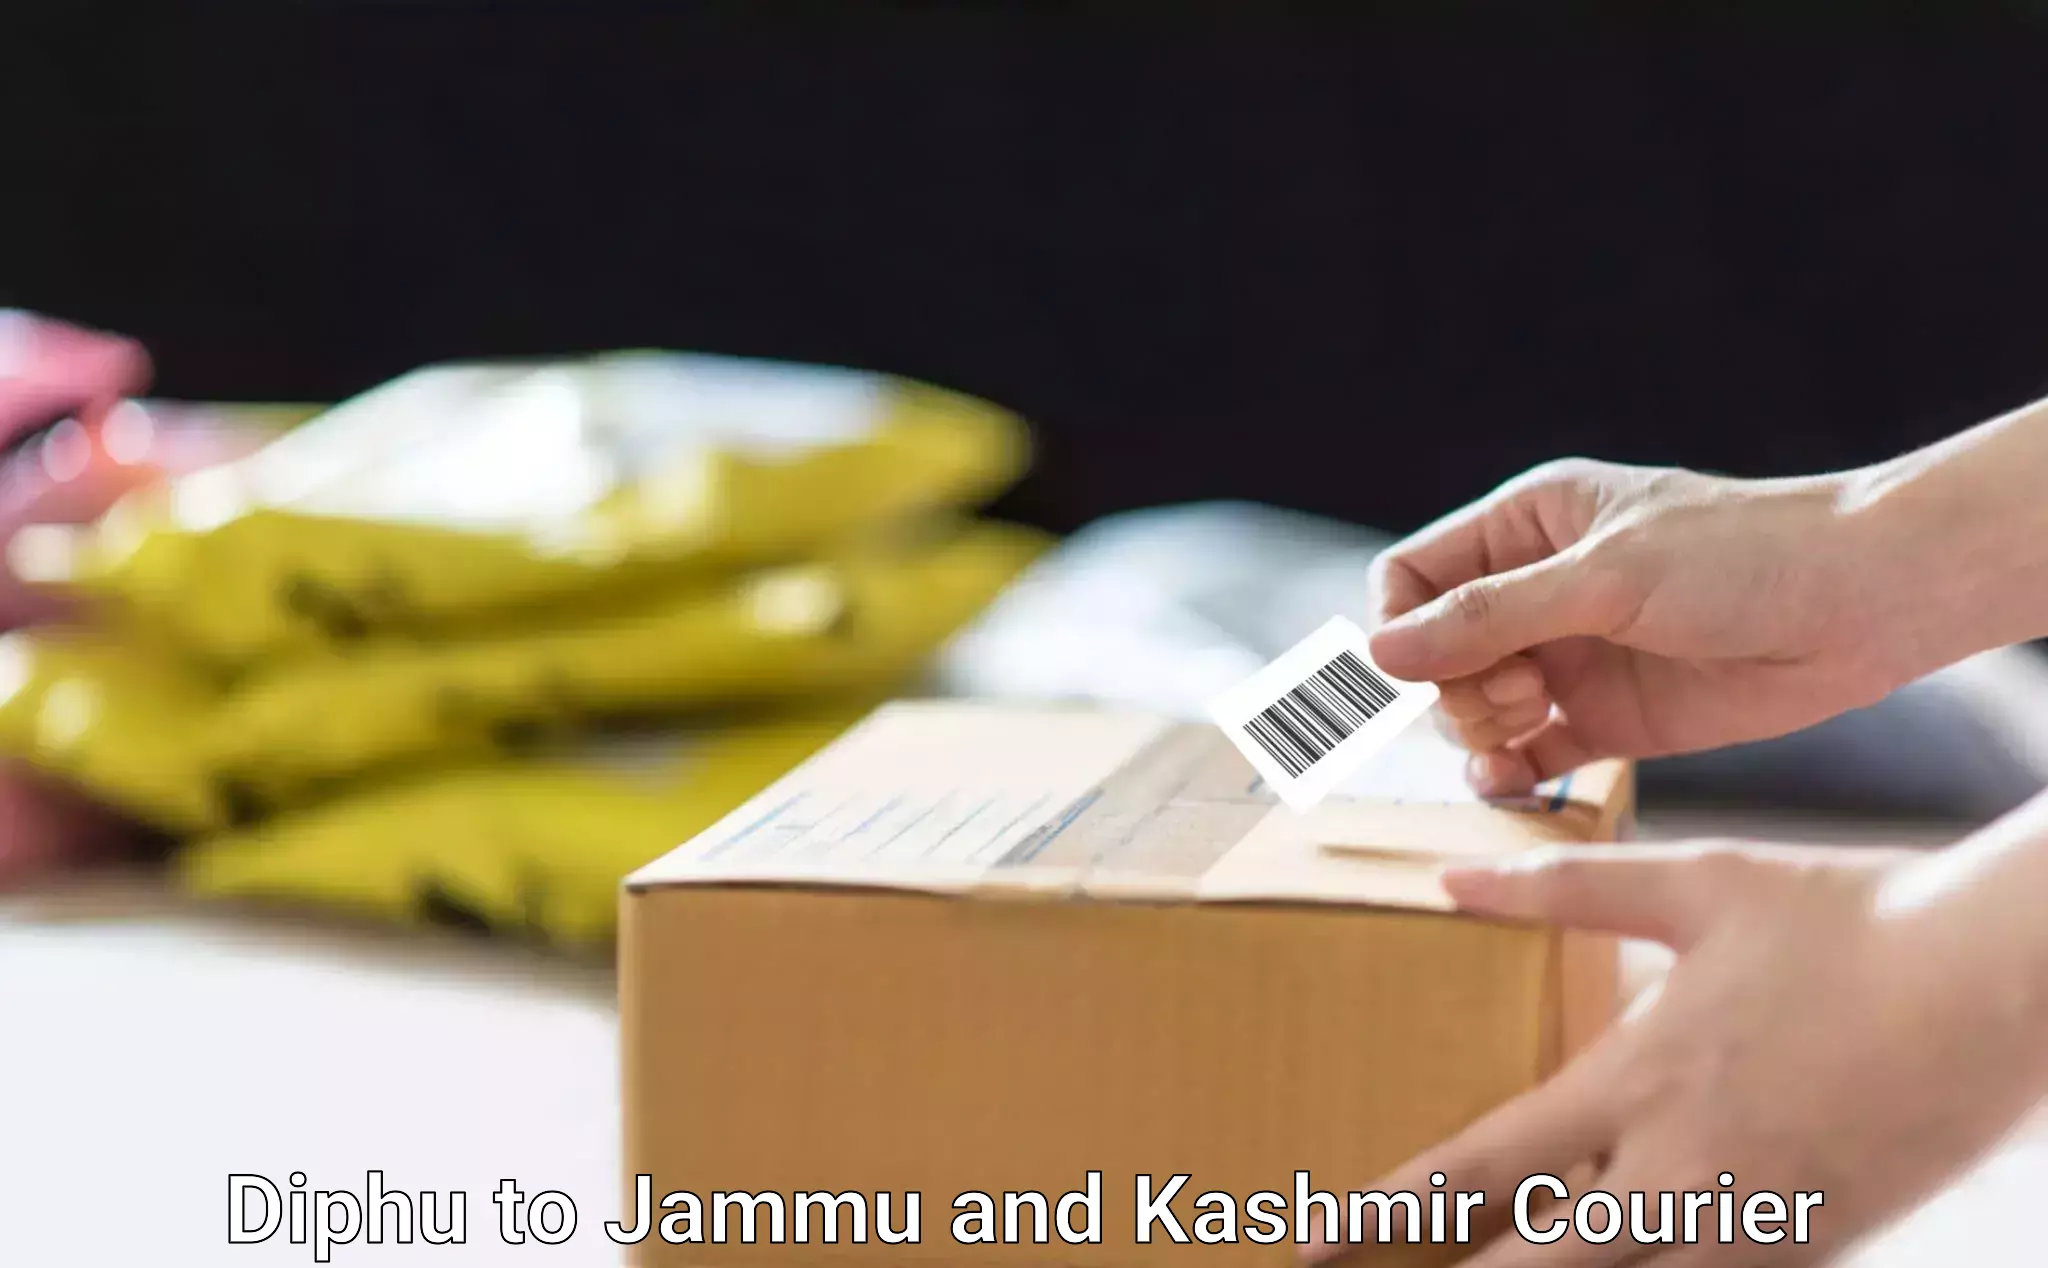 Customizable delivery plans Diphu to University of Kashmir Srinagar